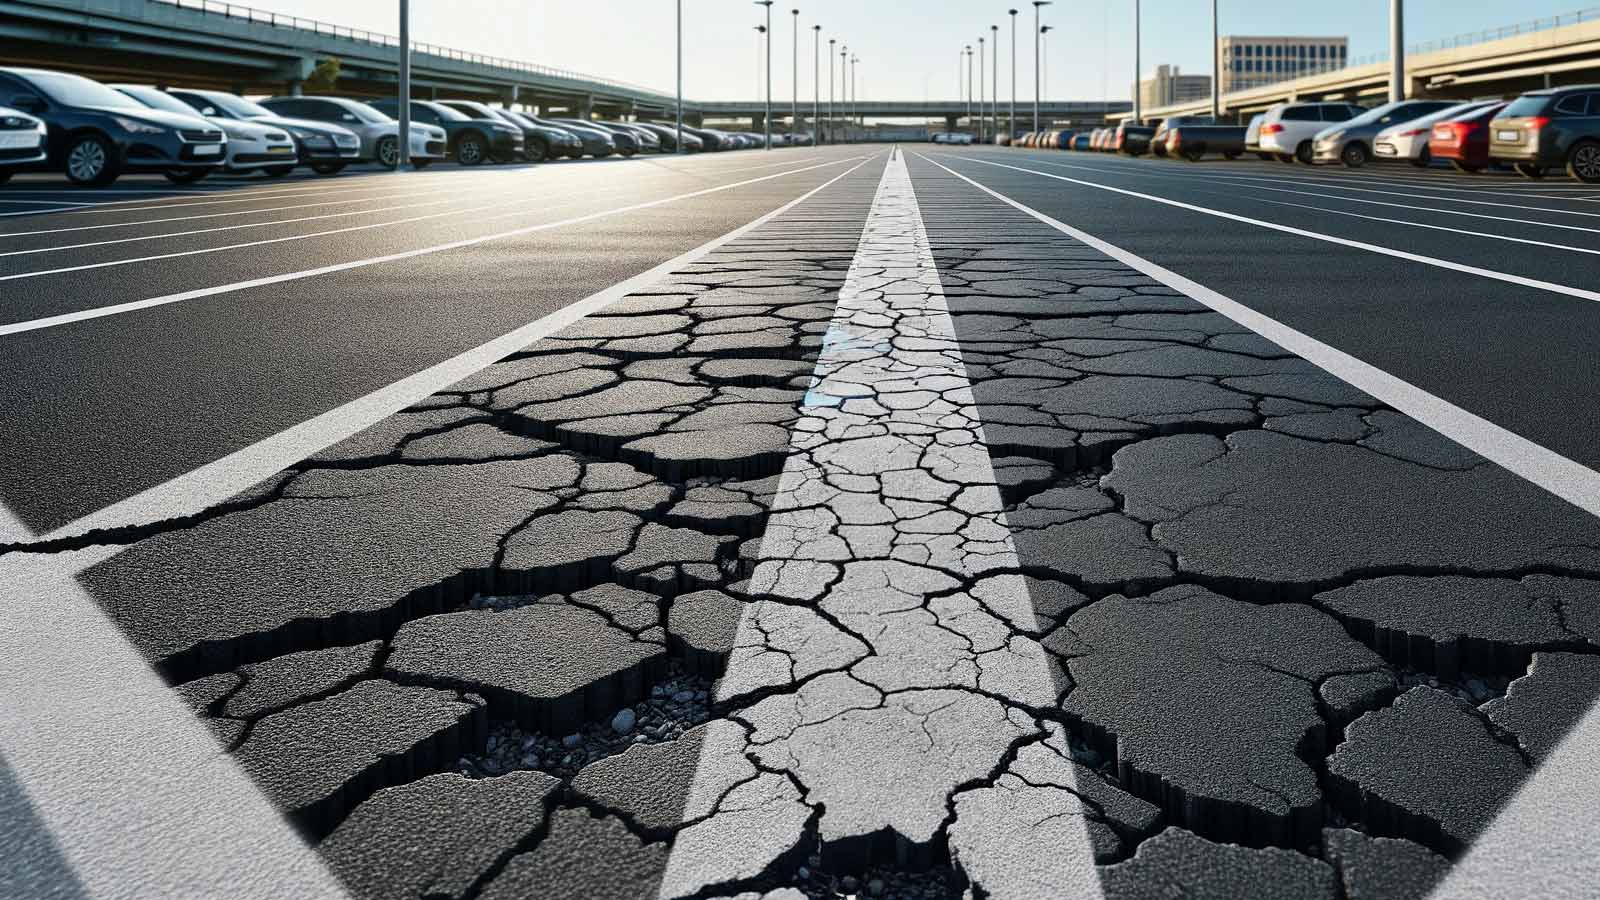 asphalt crack repair services in nj